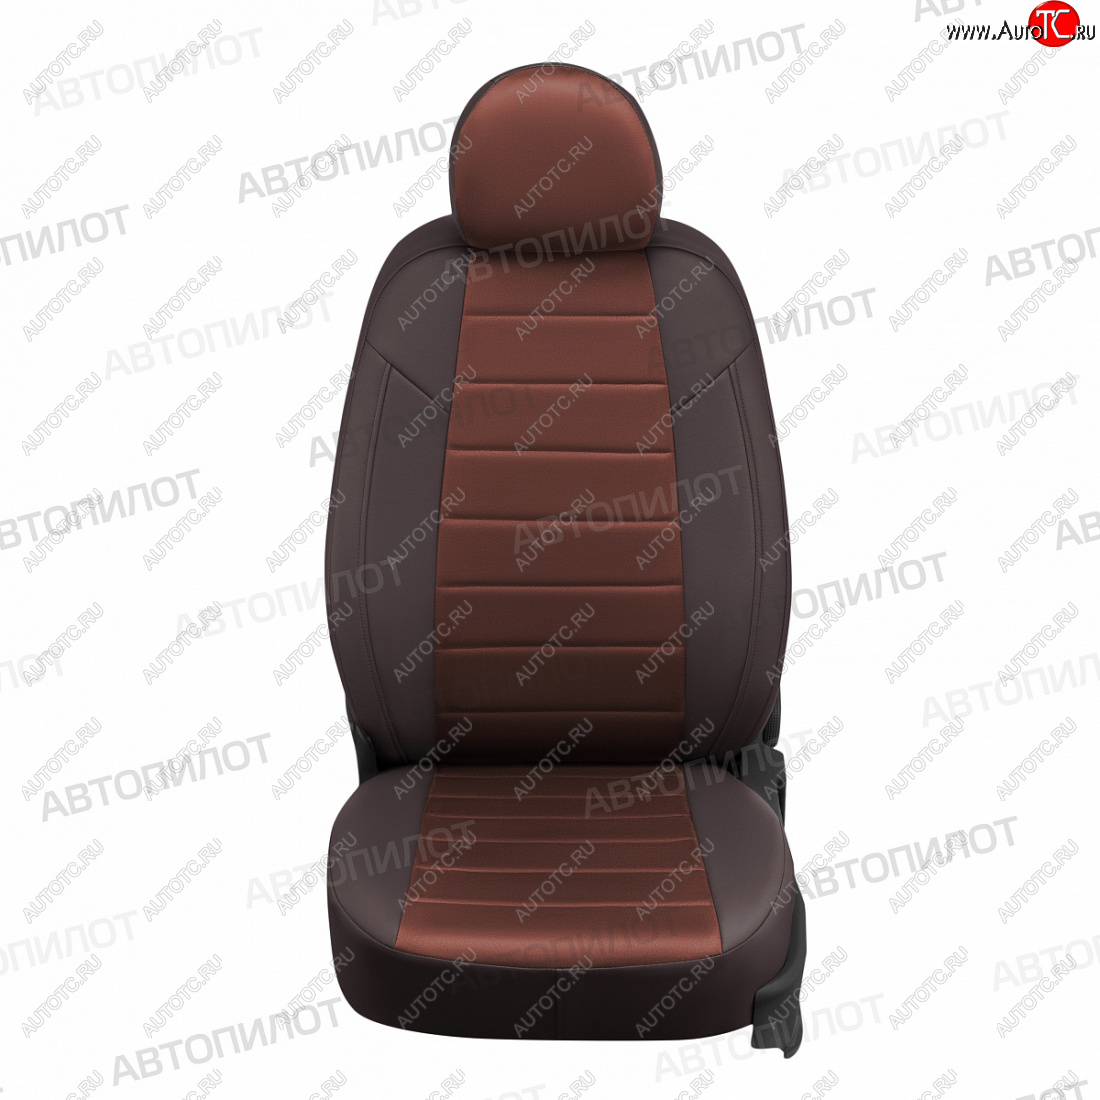 20 999 р. Чехлы сидений (экокожа/алькантара, 8 мест) Автопилот  Hyundai Staria  US4 (2021-2022) (шоколад)